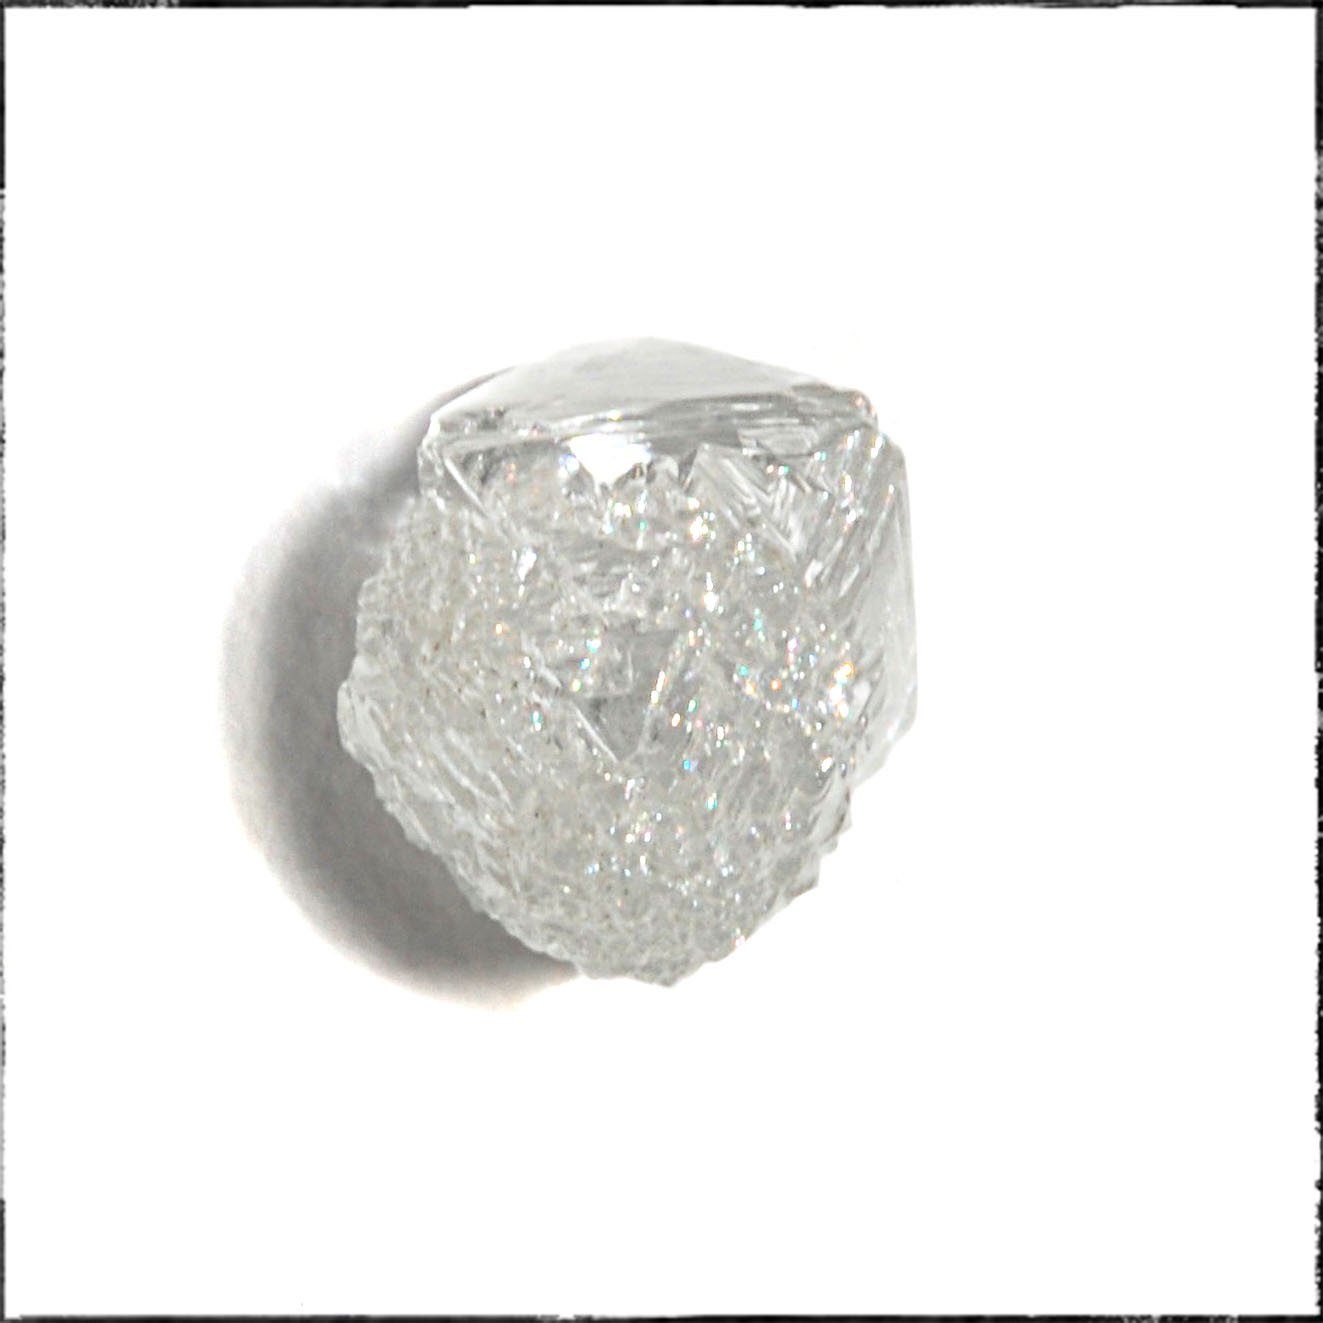 1.08 carat rough diamond crystal – The Raw Stone